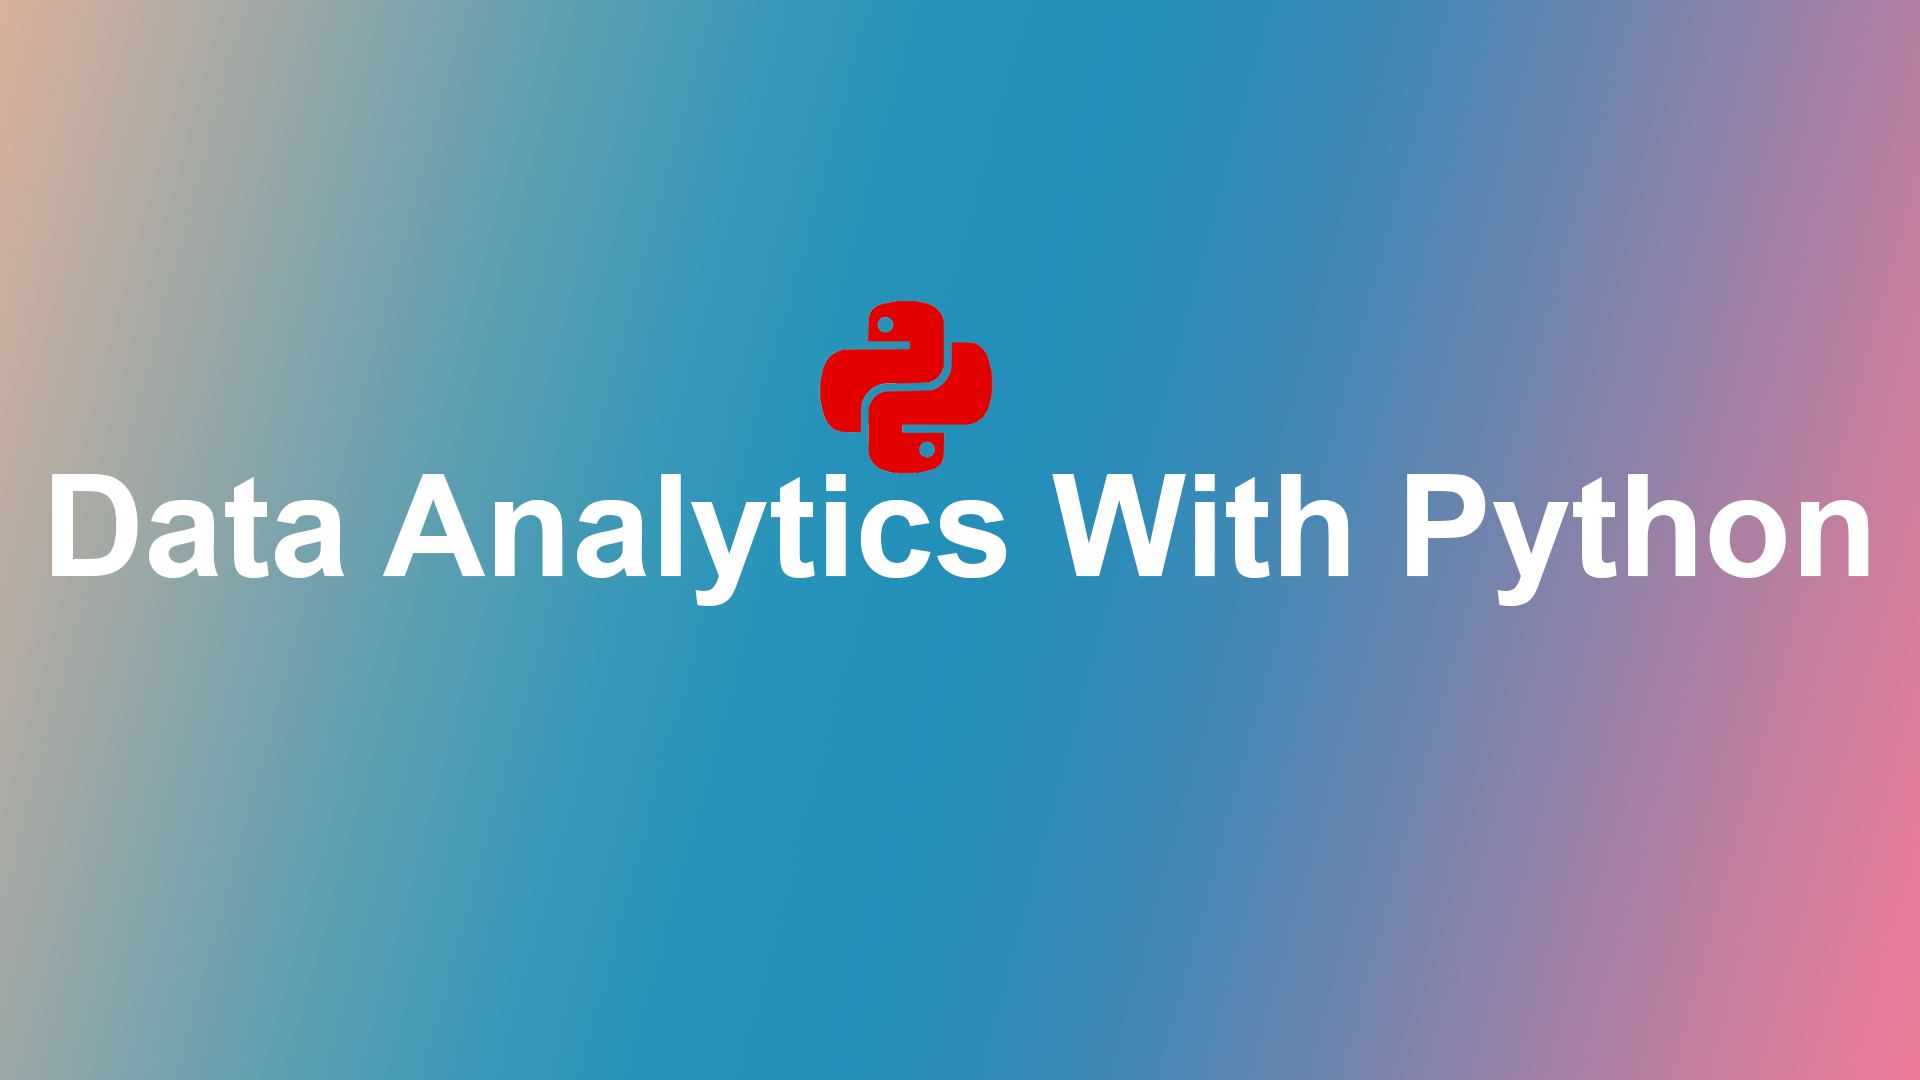 Data Analytics with Python Training